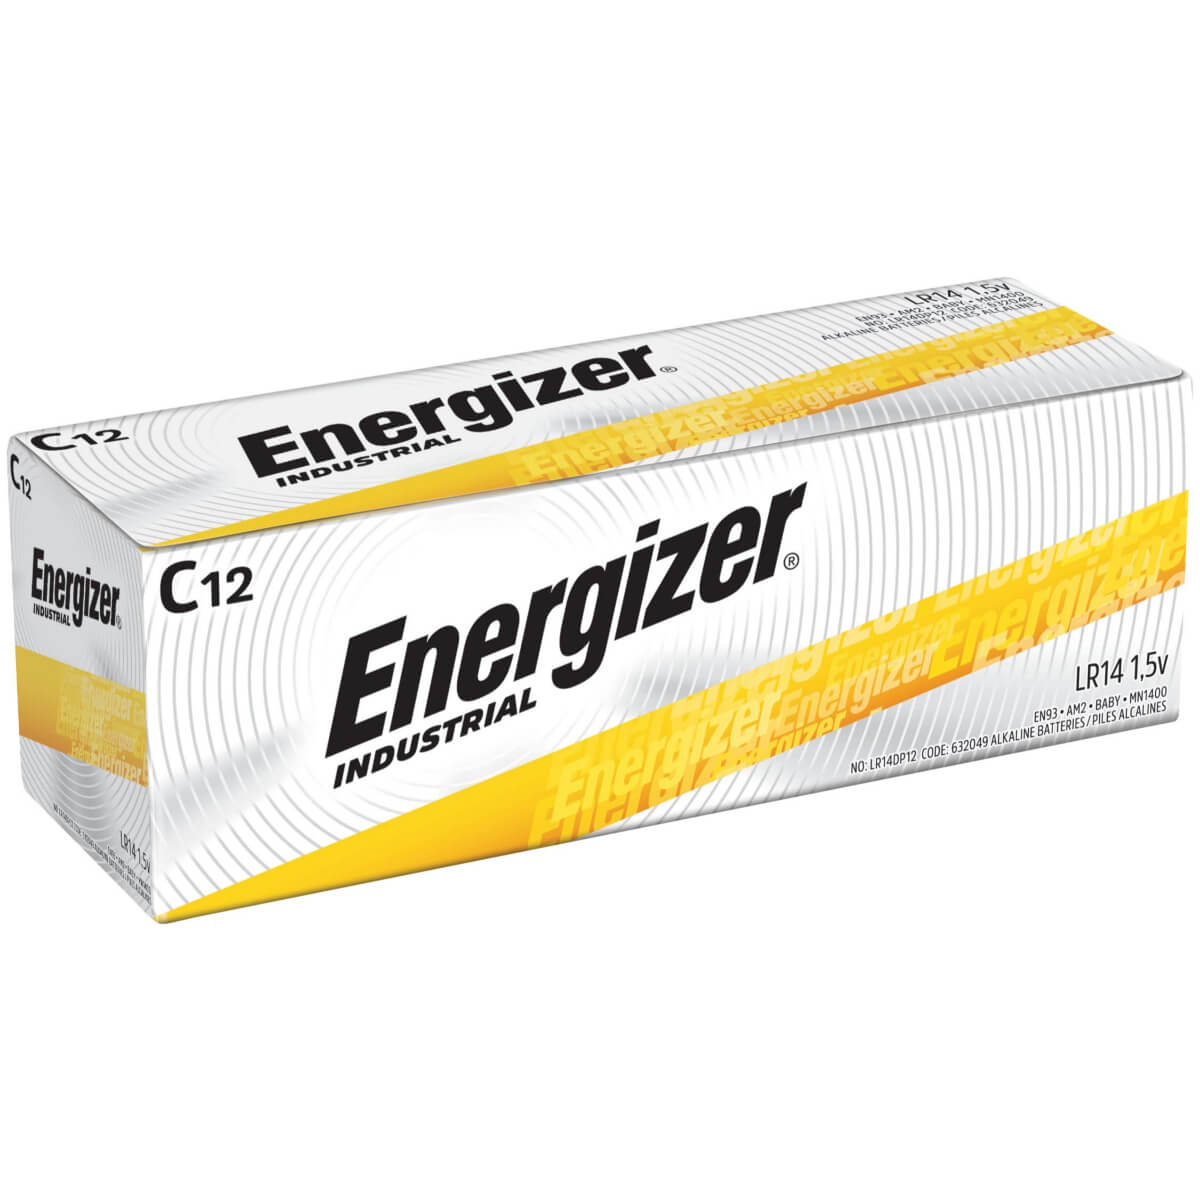 Energizer C Industrial Alkaline Batteries Model En93 - Non Rechargeable Battery By Use Energizer   